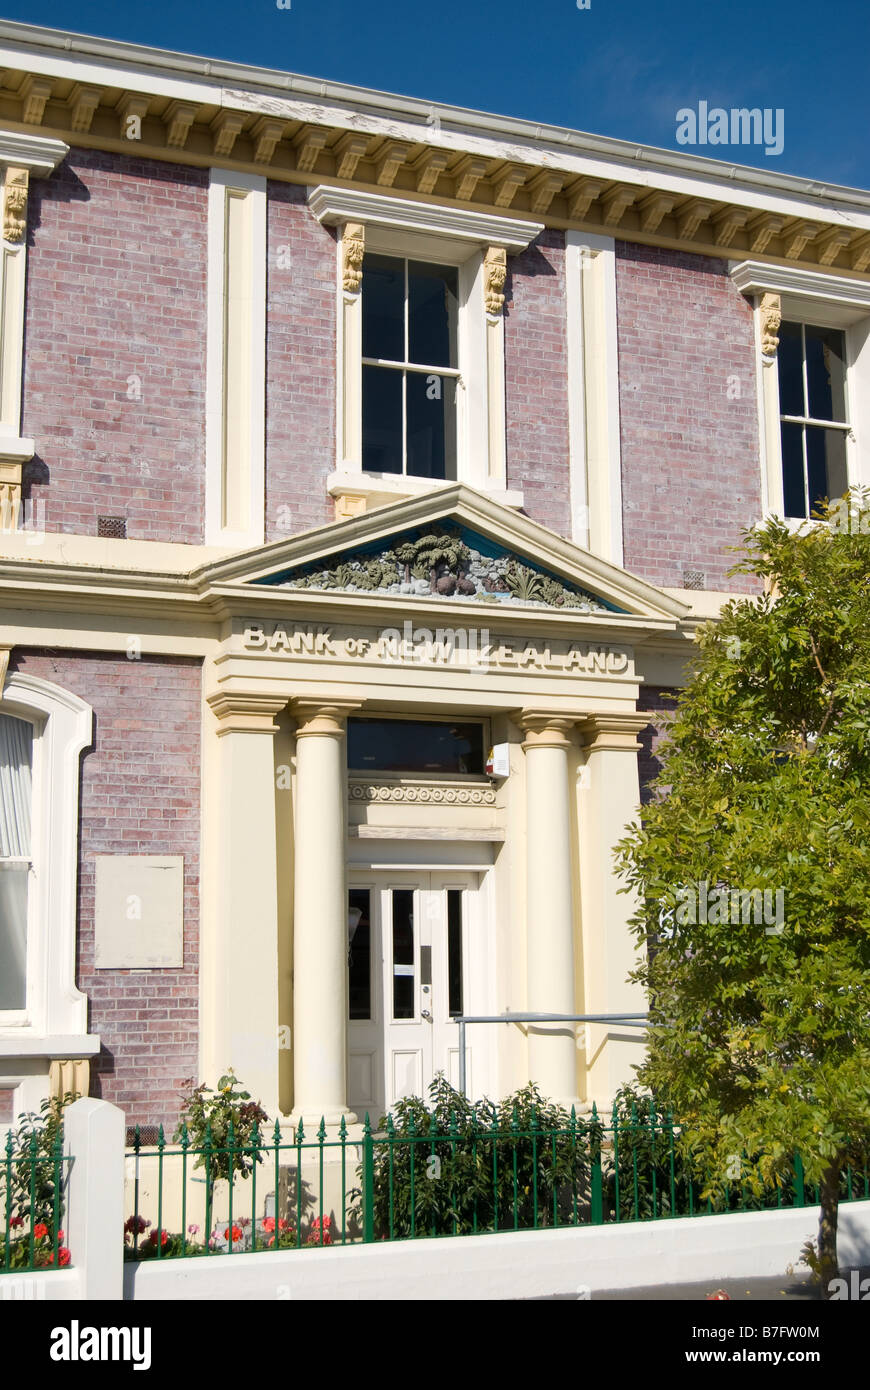 Historic Bank of New Zealand Building, Williams Street, Kaiapoi, Waimakariri District, Canterbury, New Zealand Stock Photo